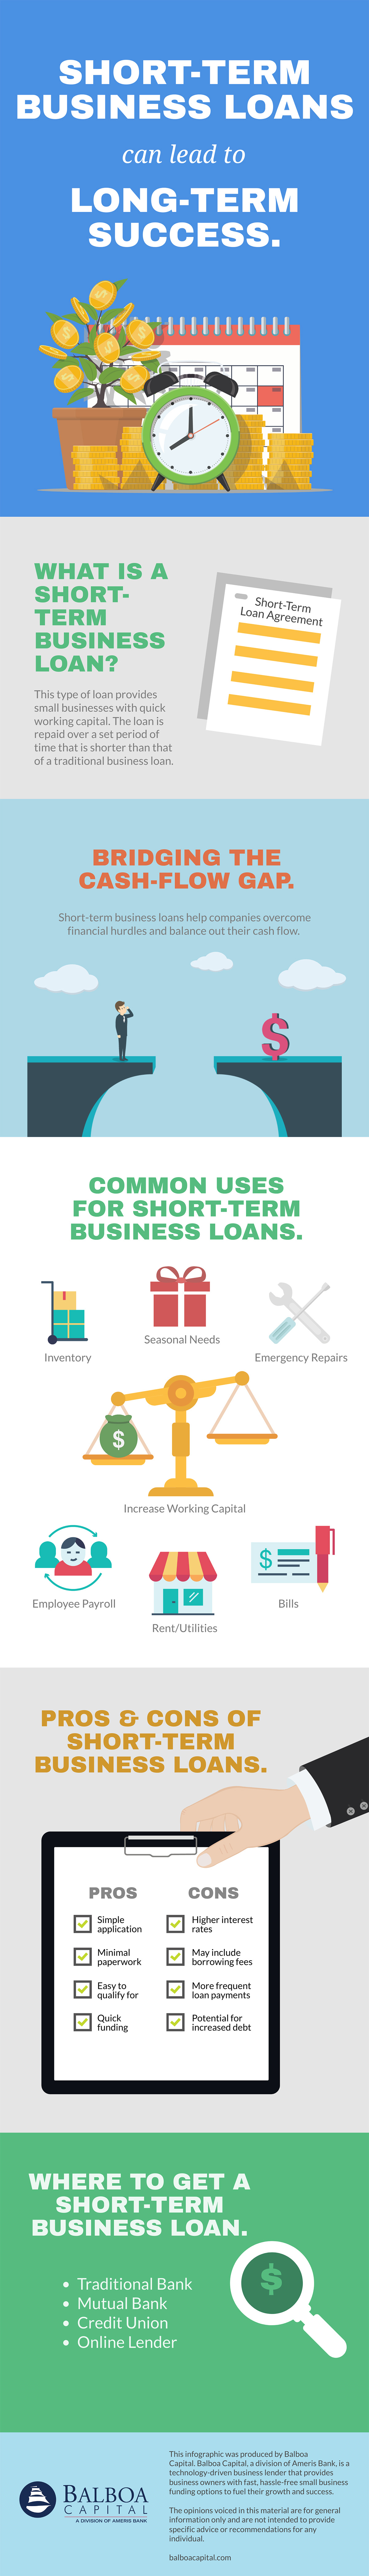 Short-Term Business Loans Infographic